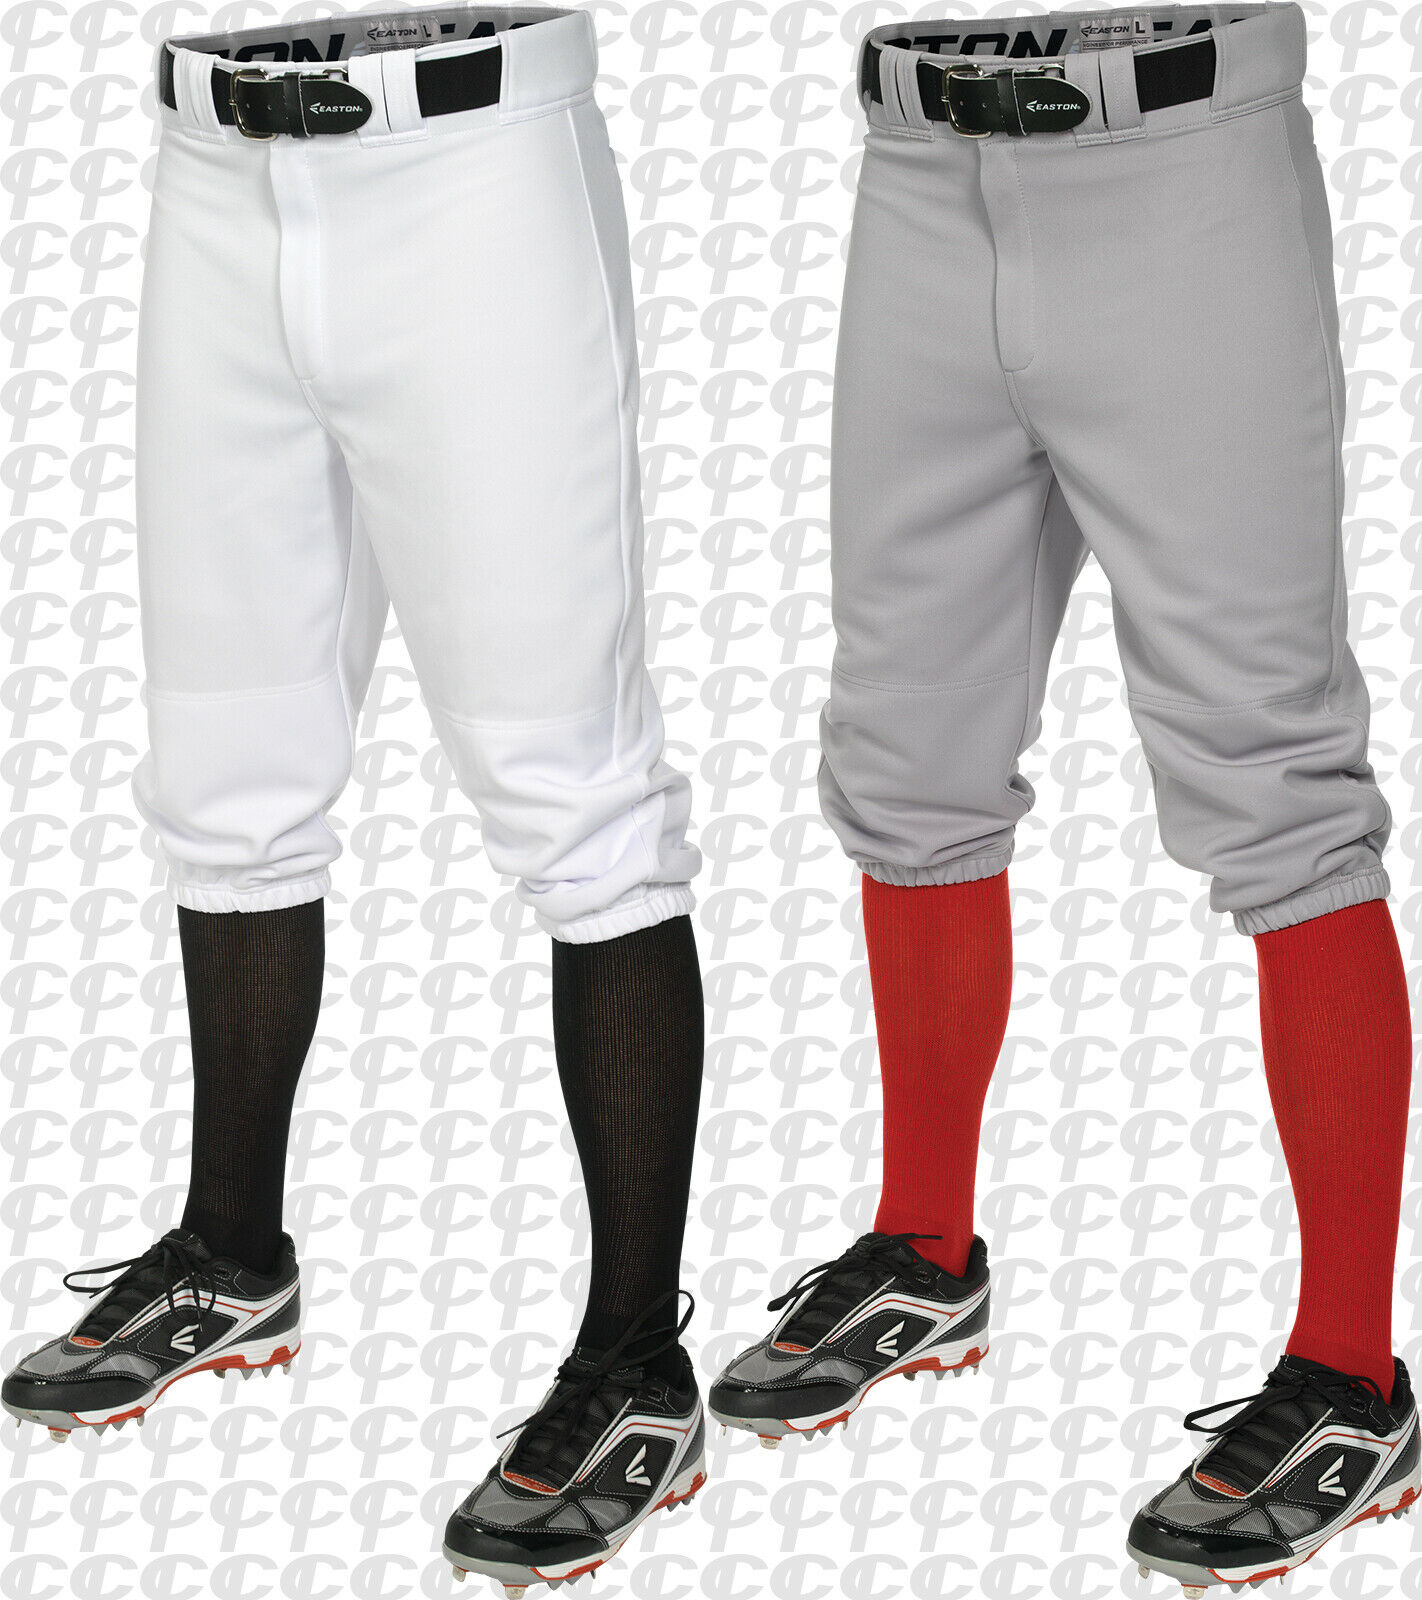 Easton Youth Boys Pro + Knicker Style Baseball Pants White or Grey A167104 S-XL